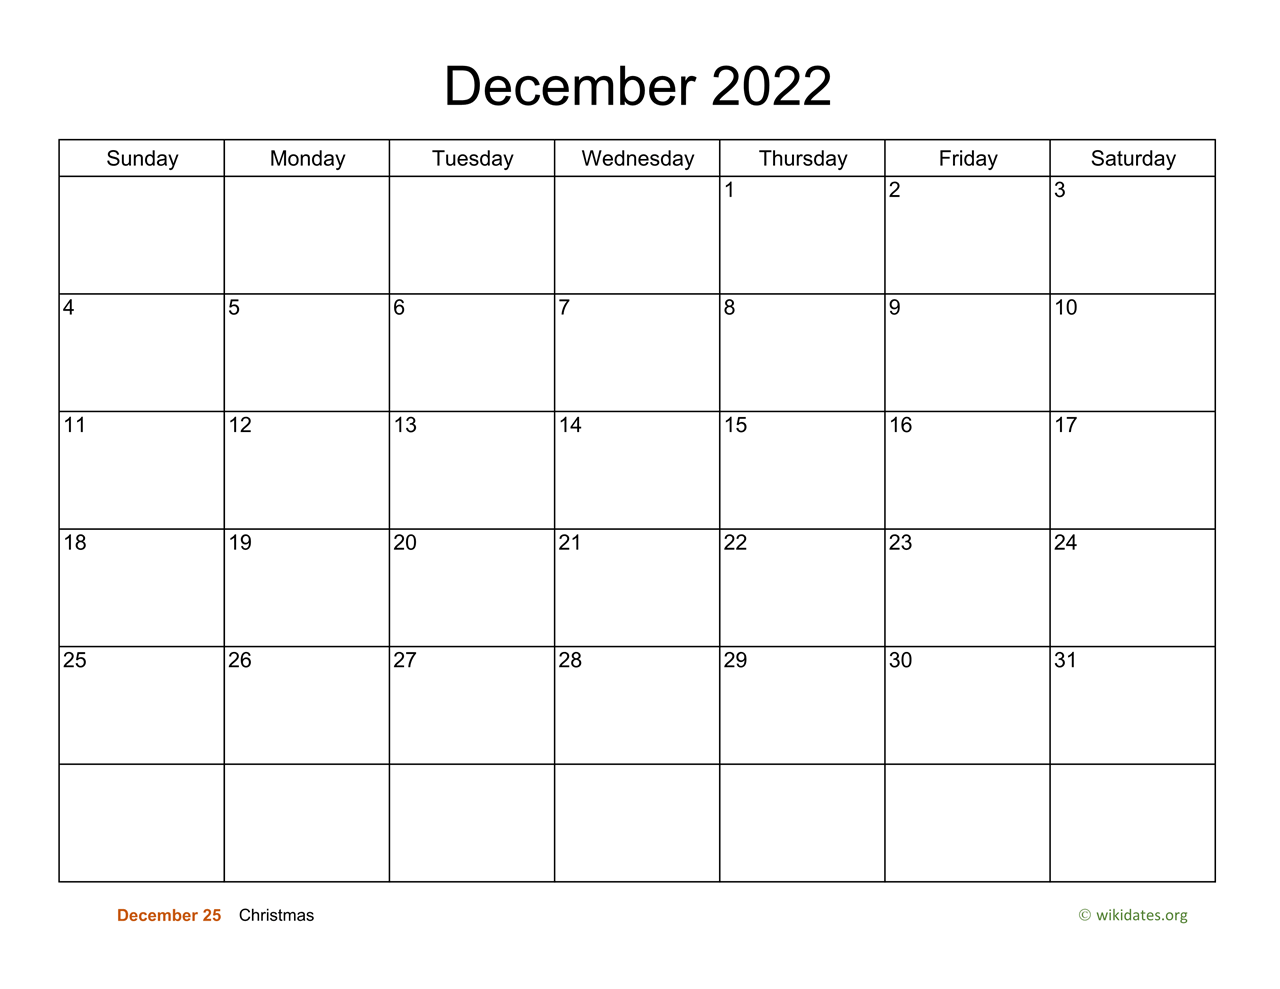 Free December 2022 Calendar Basic Calendar For December 2022 | Wikidates.org